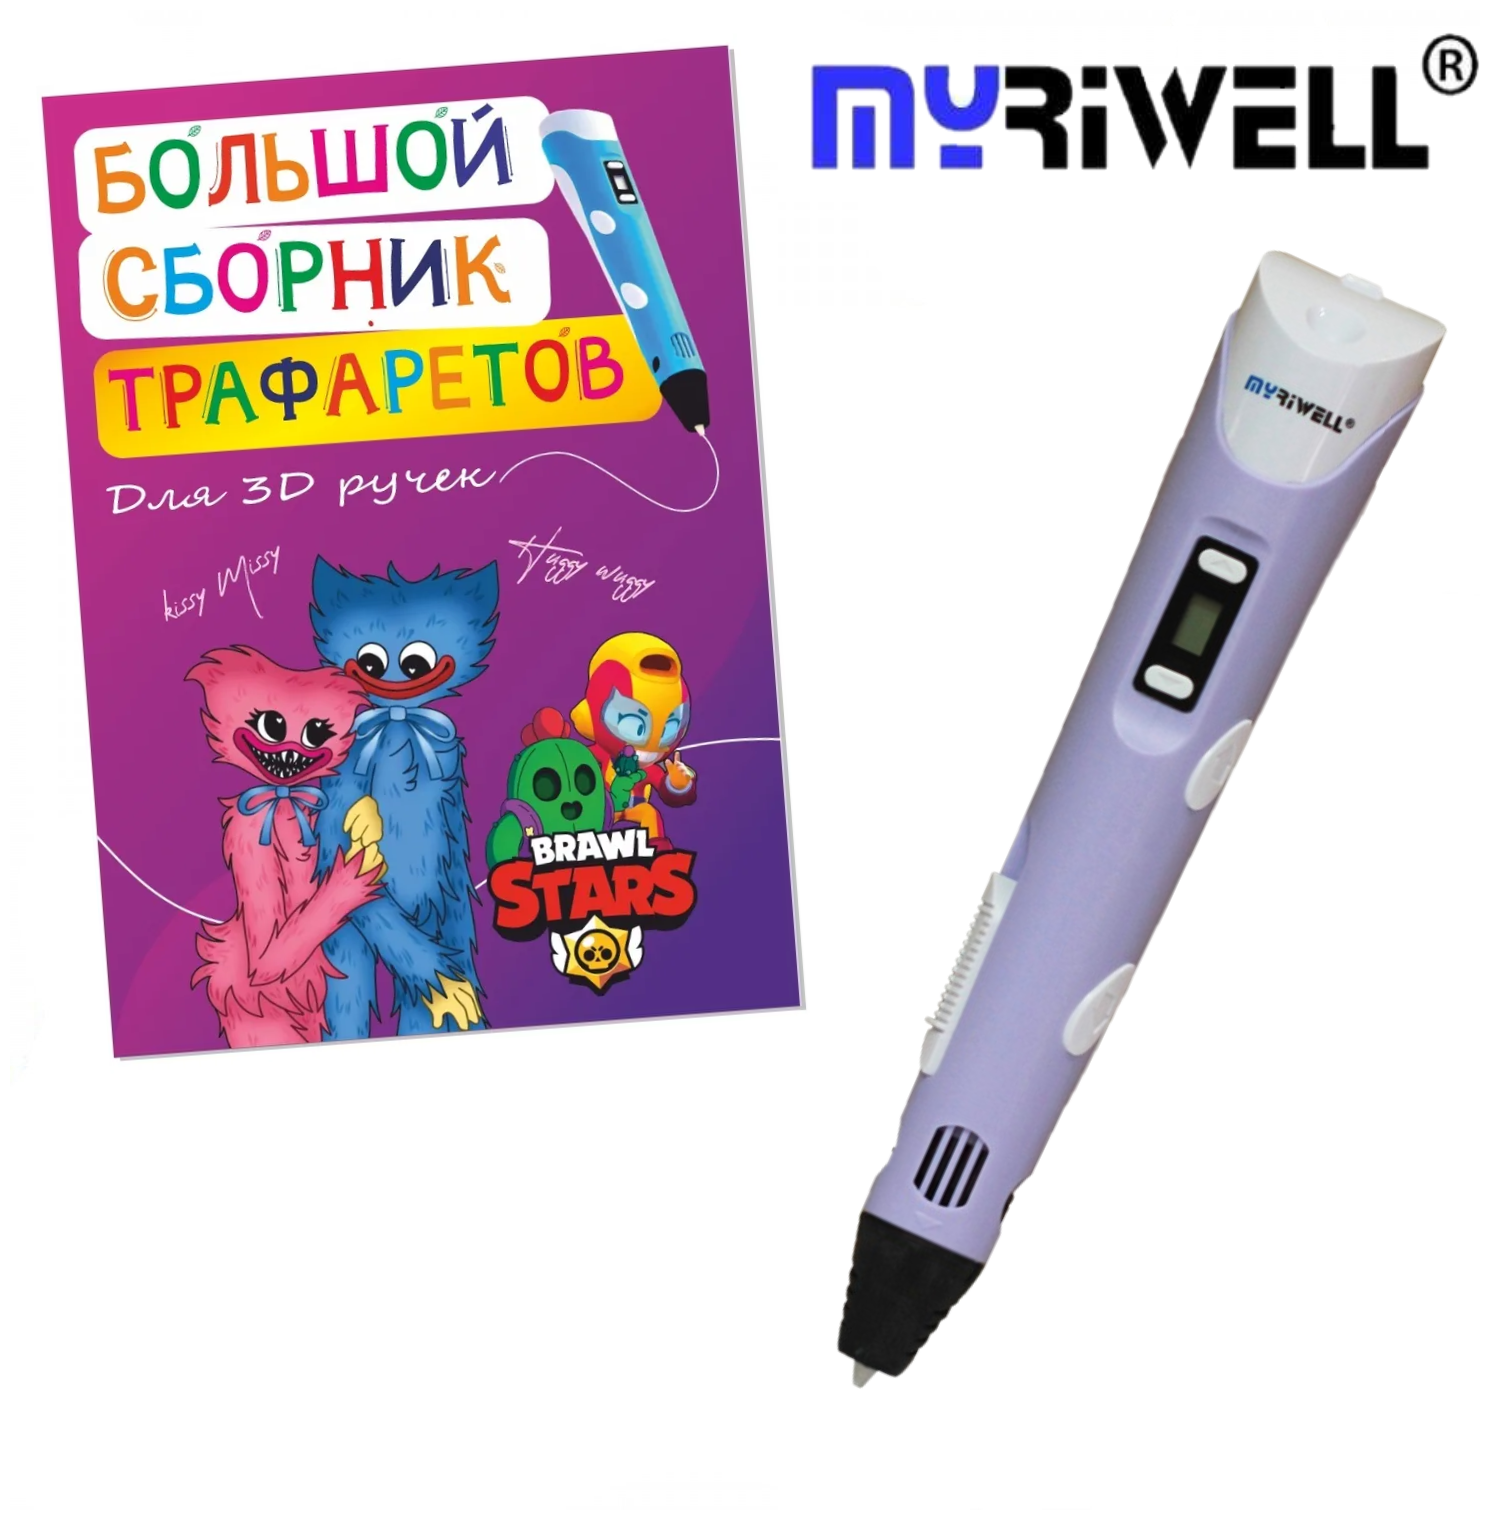 3D ручка MyRiwell с комплектом пластика ABS 150м/ Книжка с трафаретами/Прозрачный коврик/Цвет сиреневый